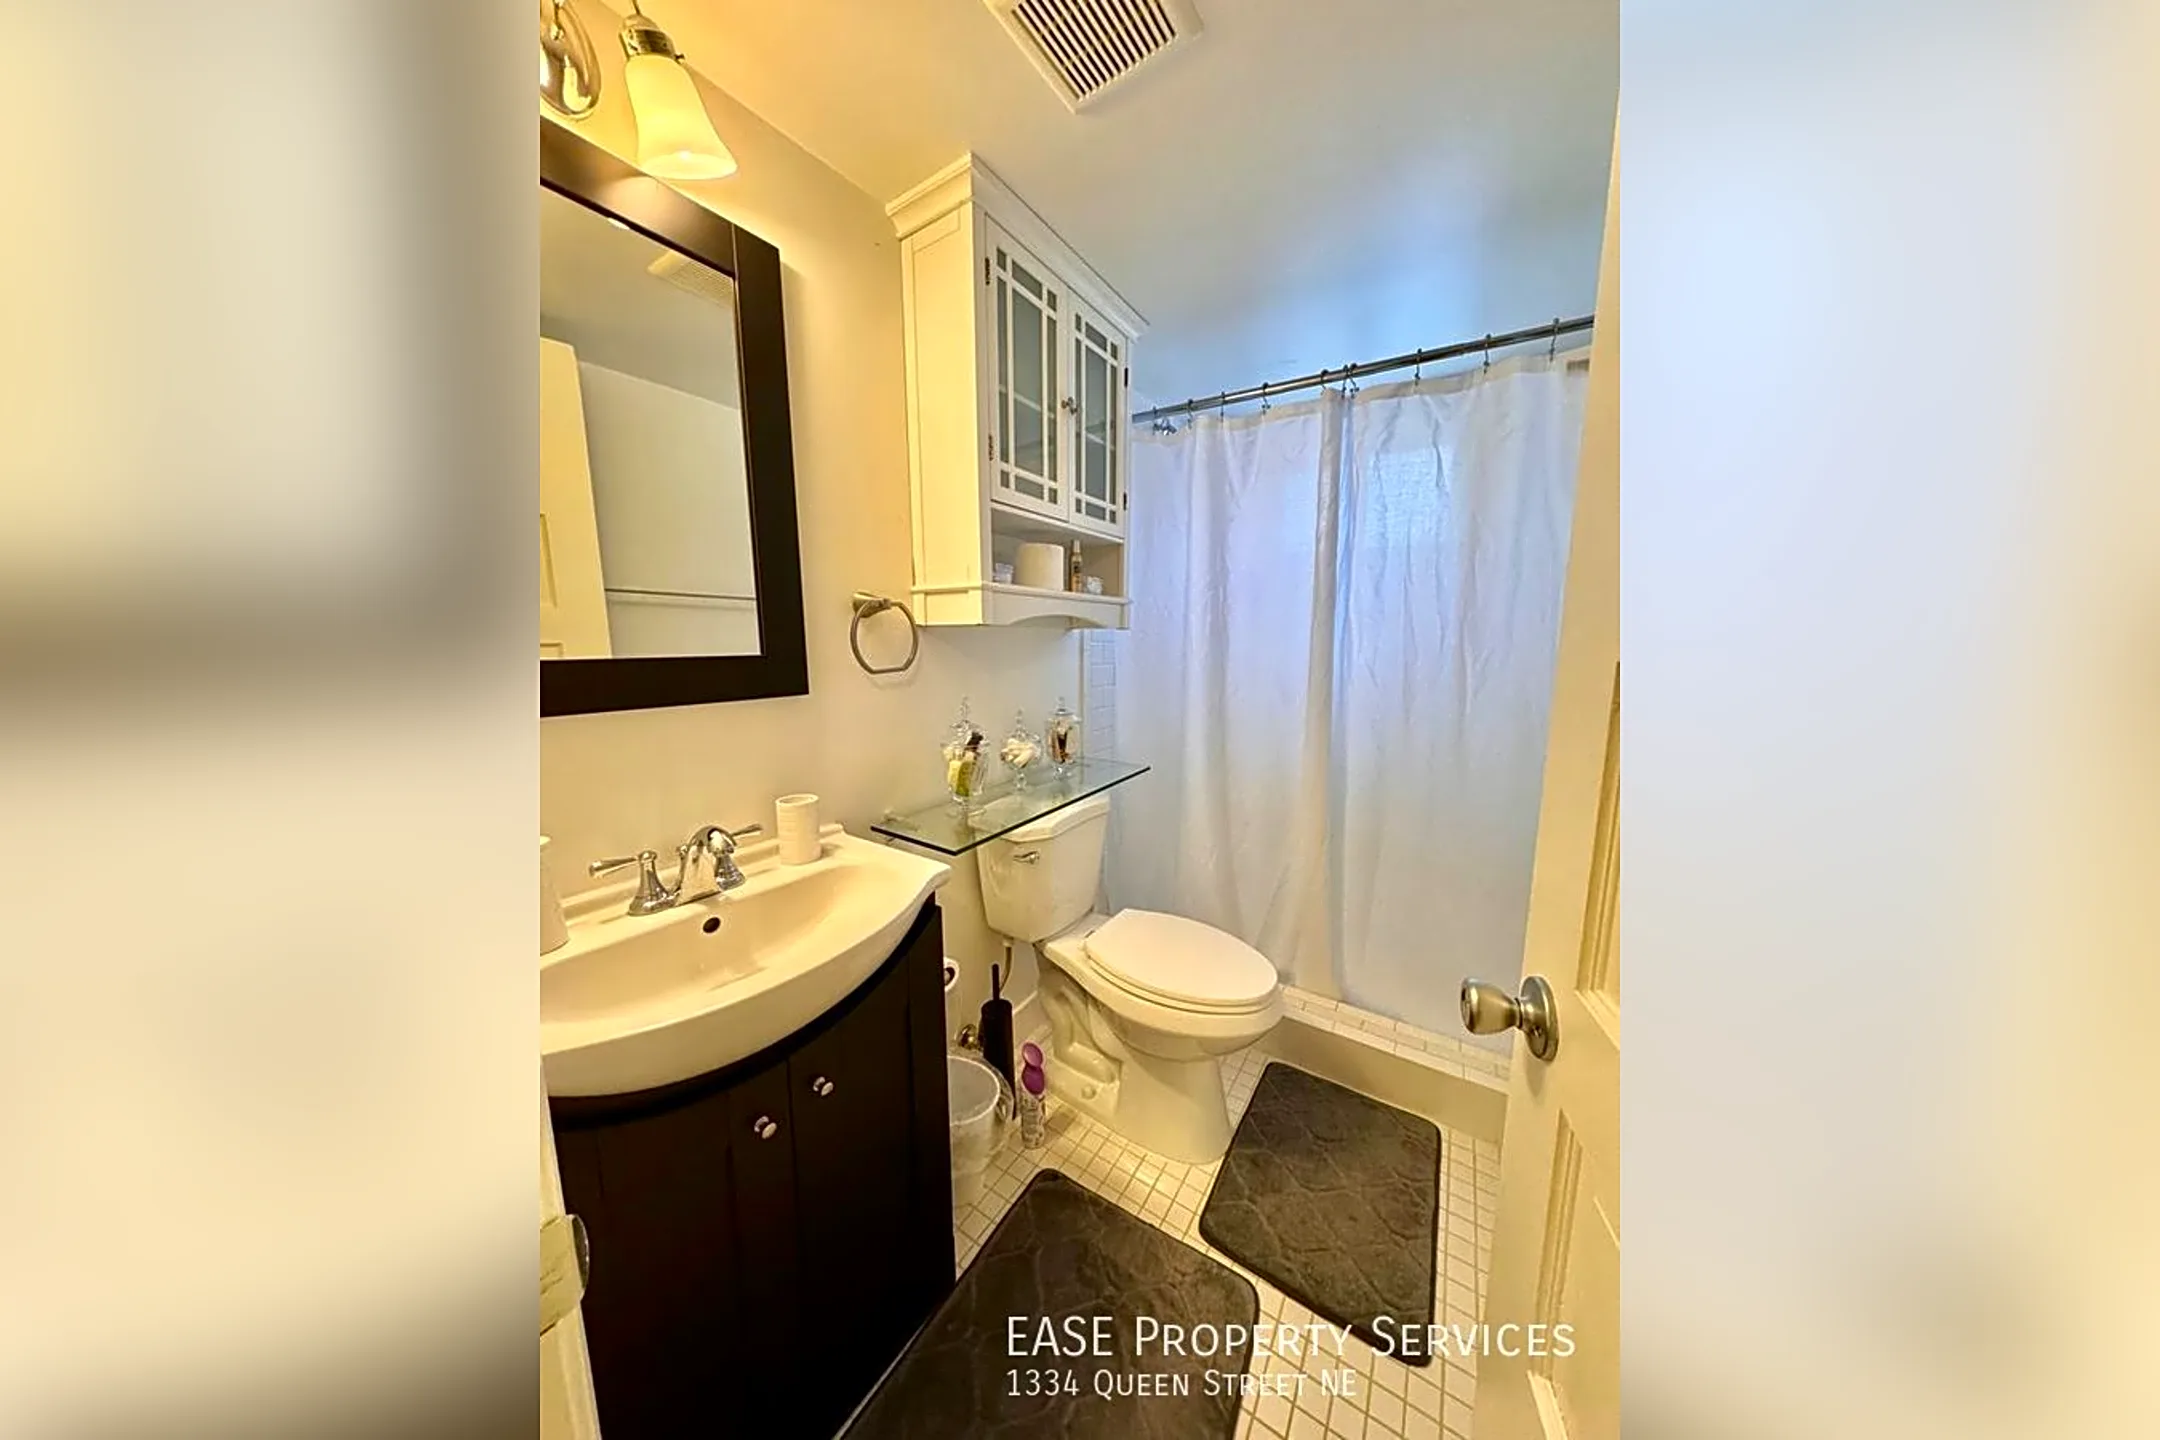 Bathroom - 1334 Queen Street NE - Washington, DC